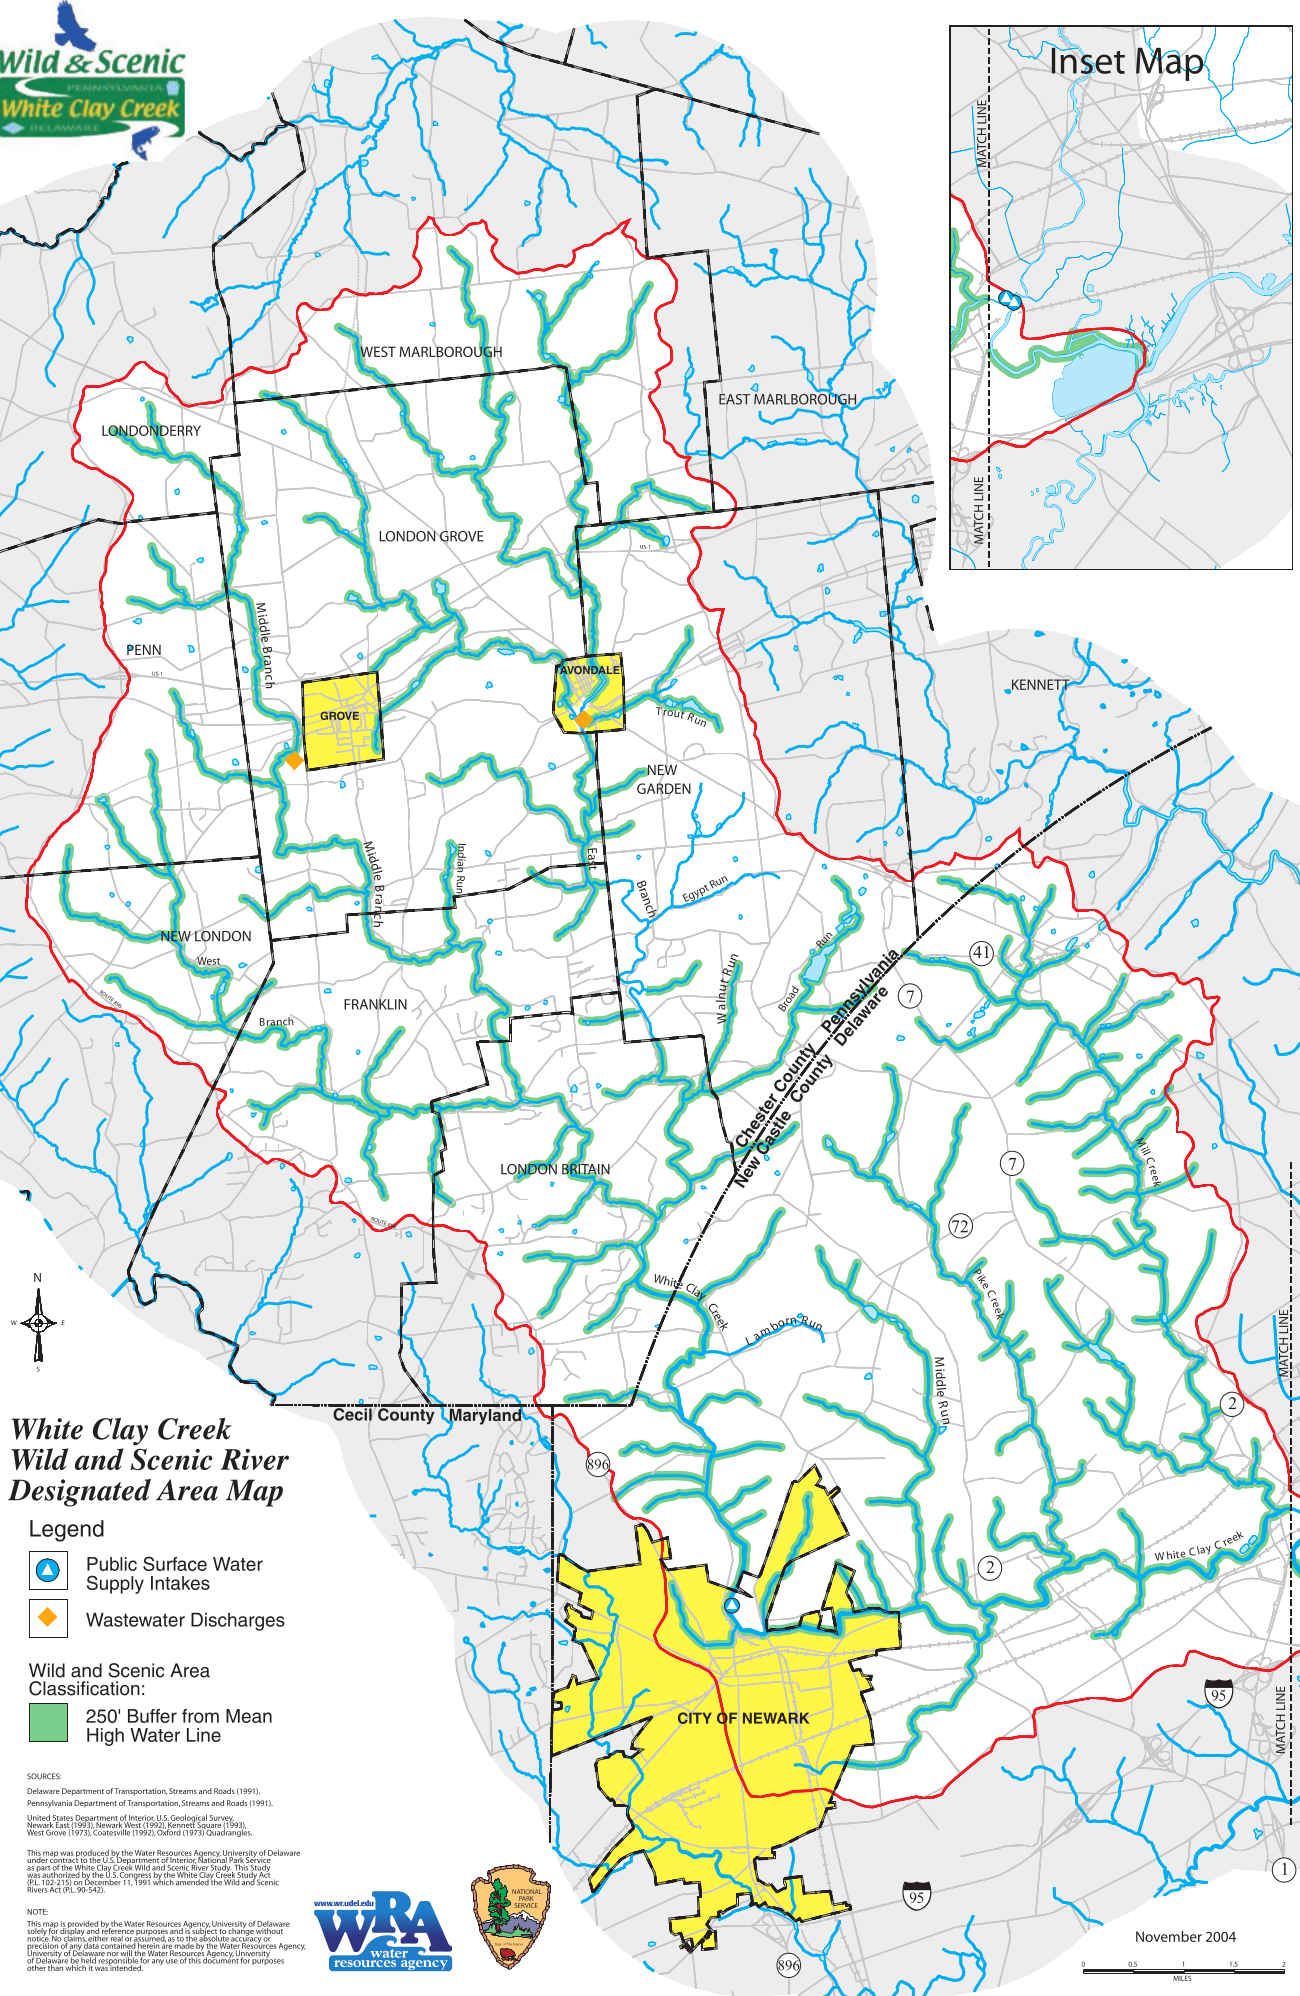 White Clay Creek Preserve - Wikipedia